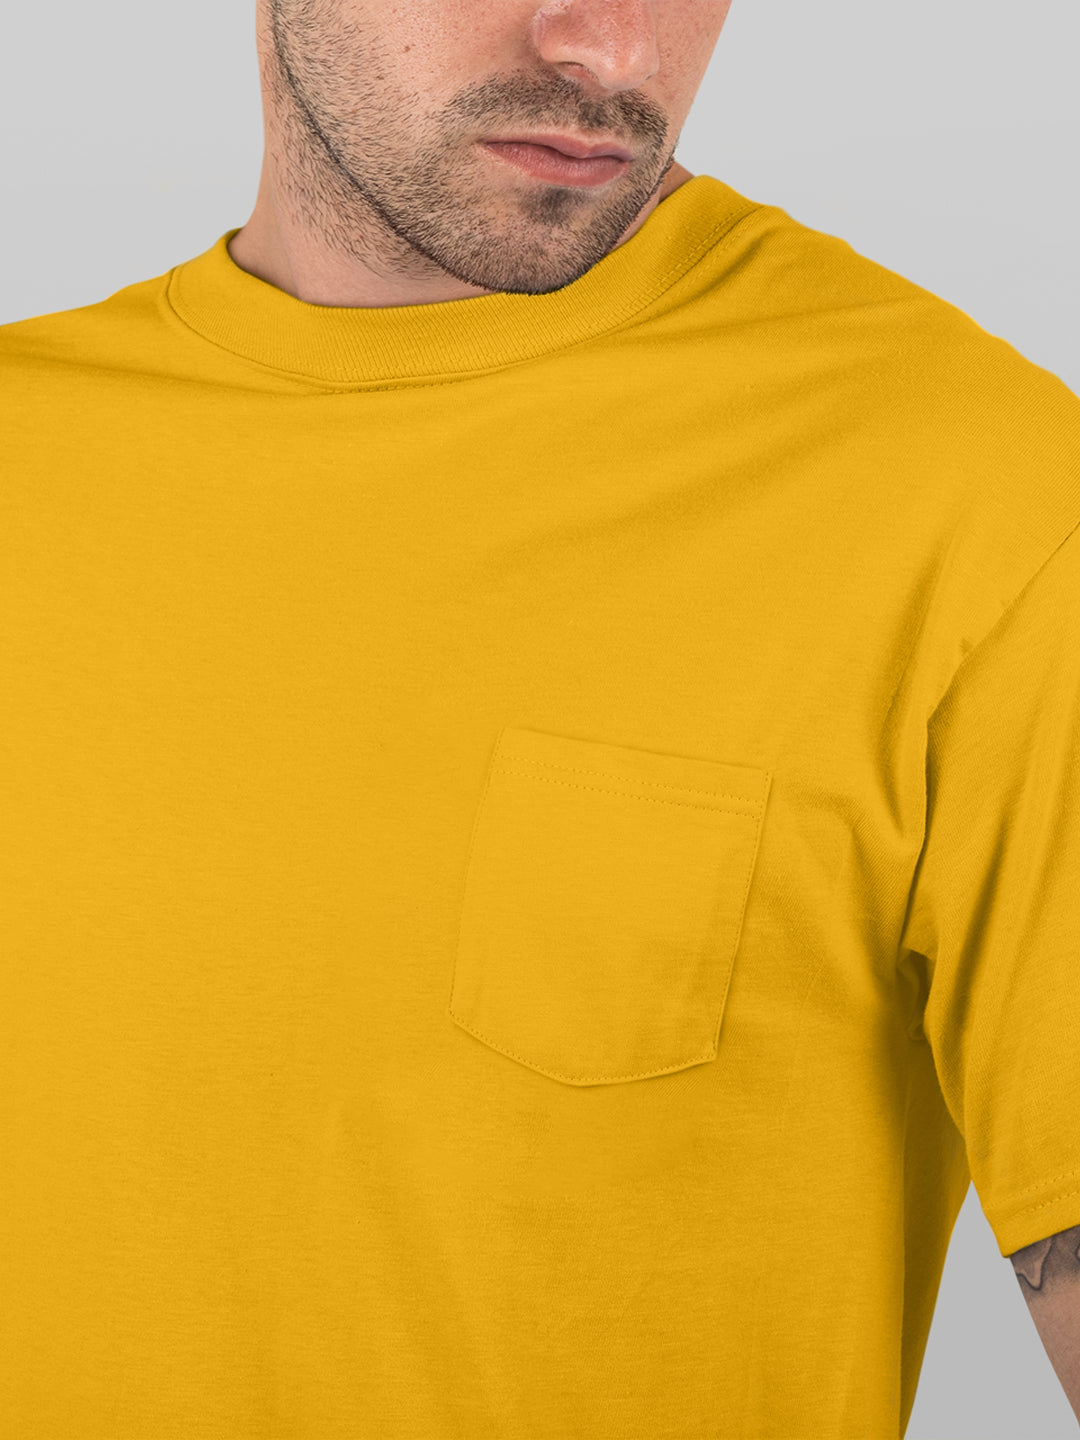 Baliza Men's 100% Cotton Round Neck T-shirt- Yellow